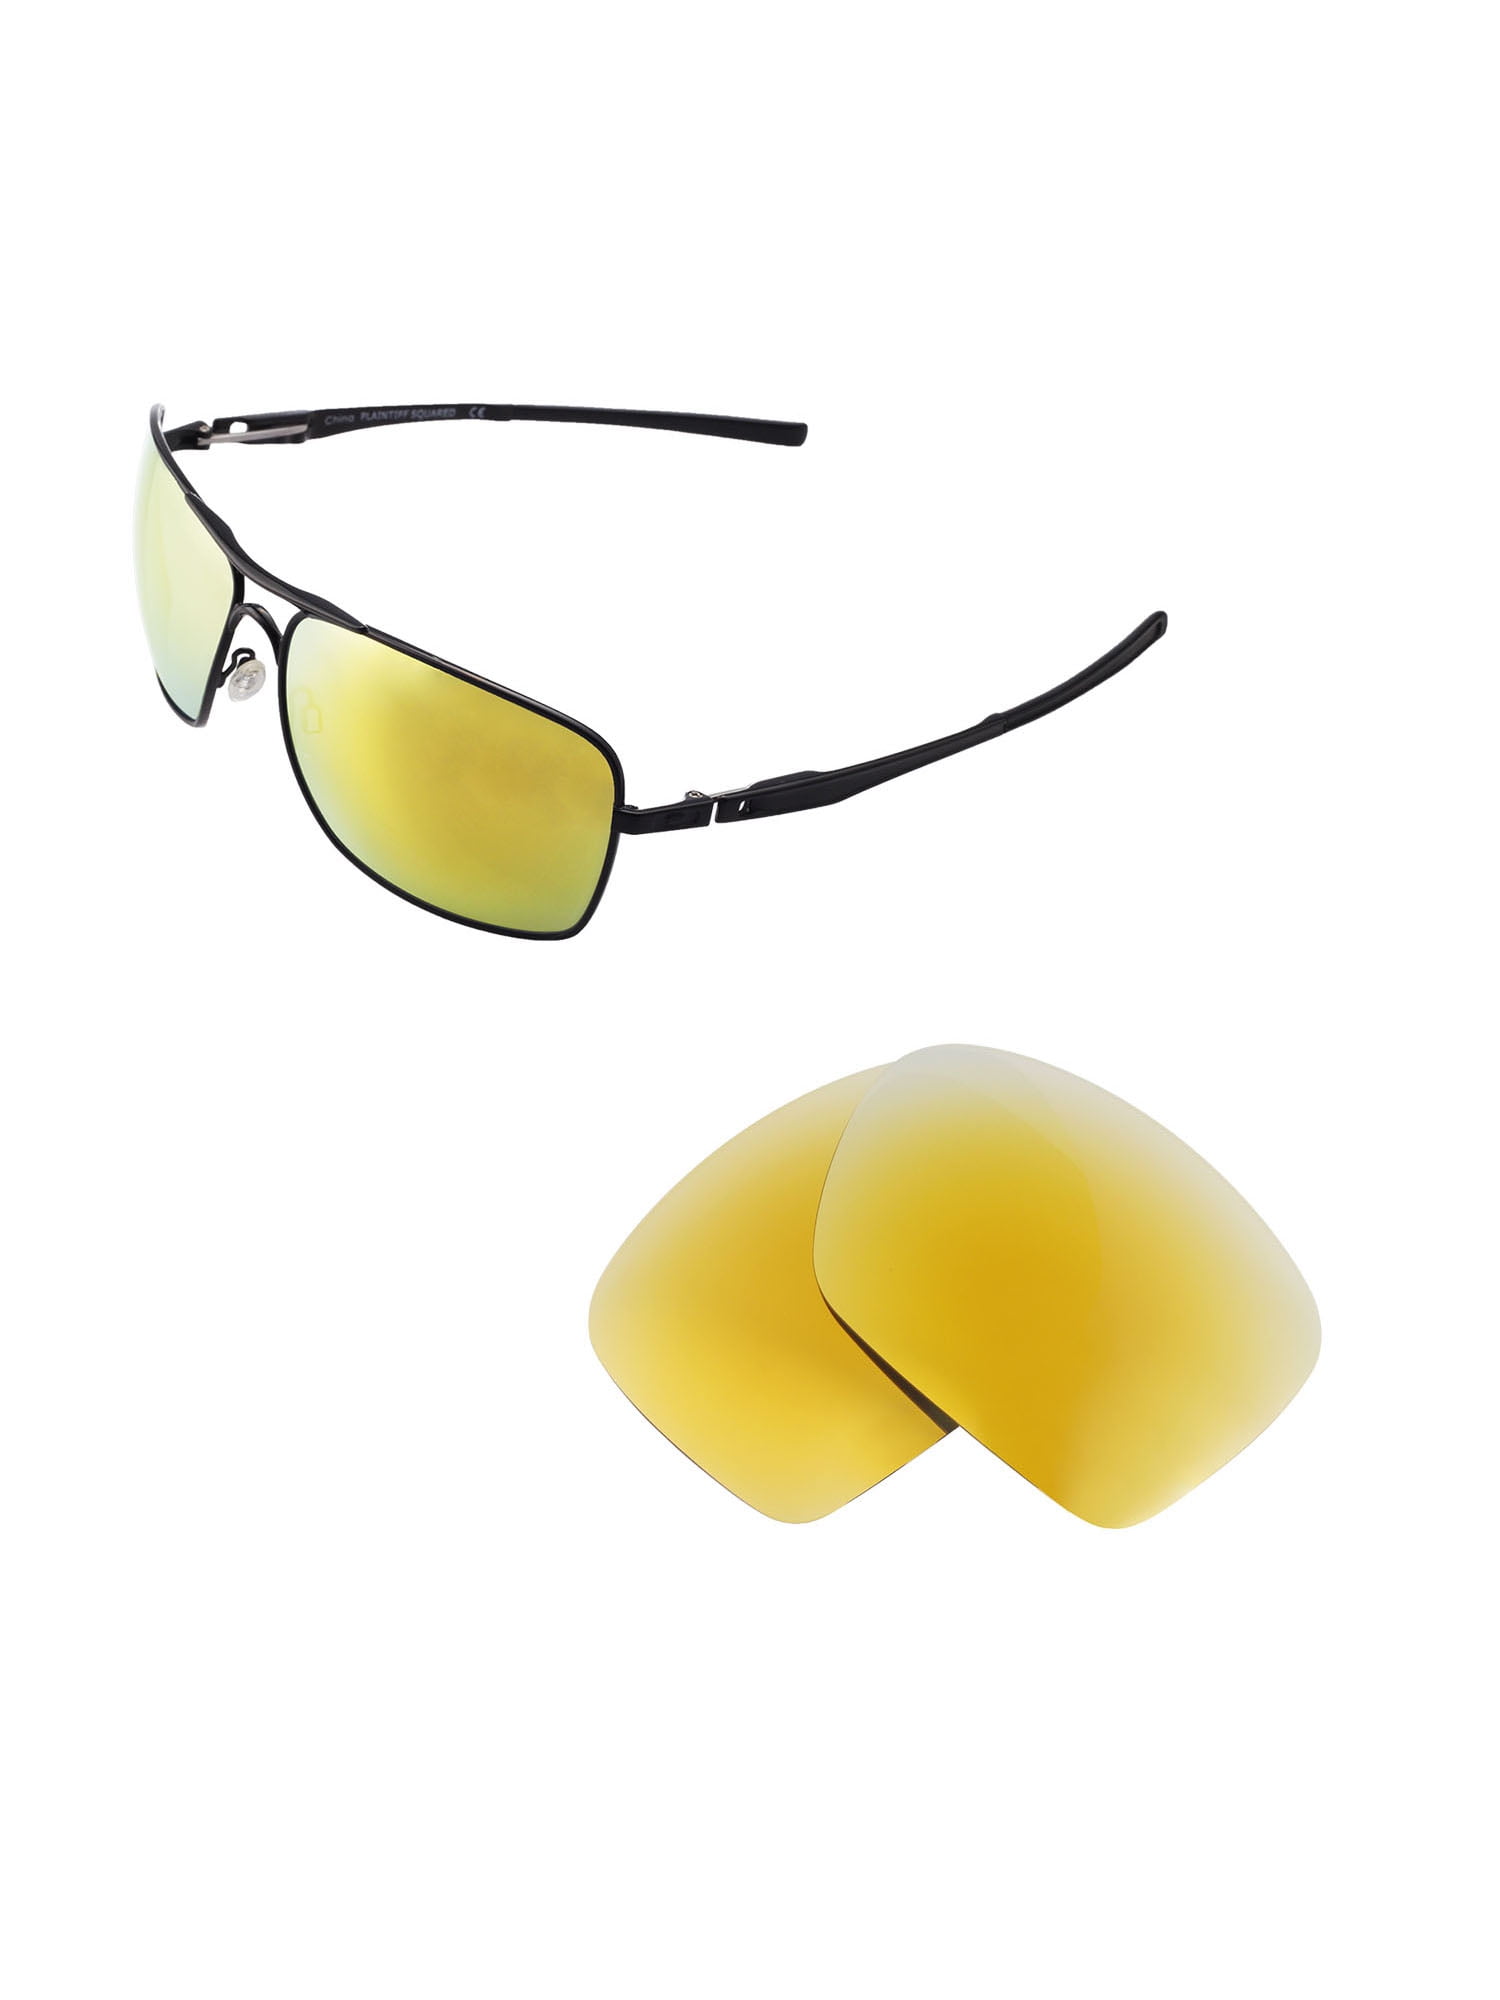 oakley plaintiff squared sunglasses